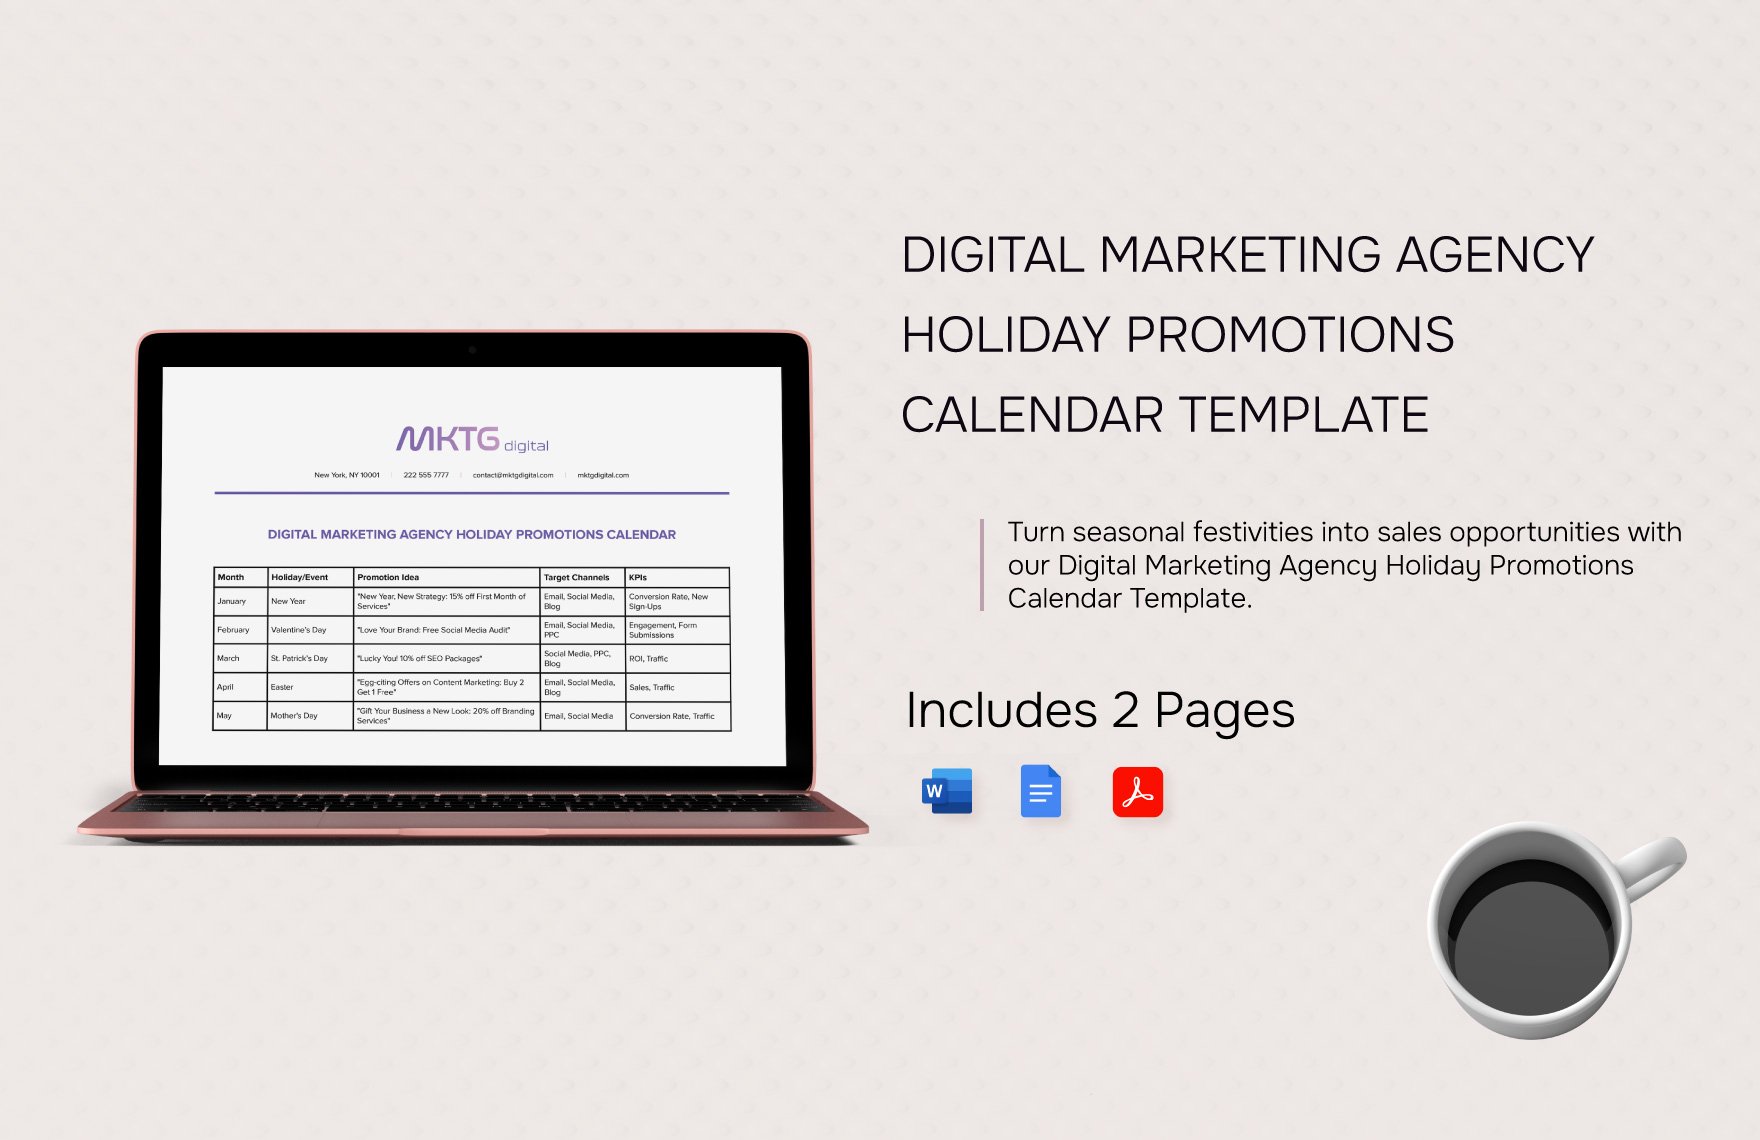 Digital Marketing Agency Holiday Promotions Calendar Template in Word, Google Docs, PDF